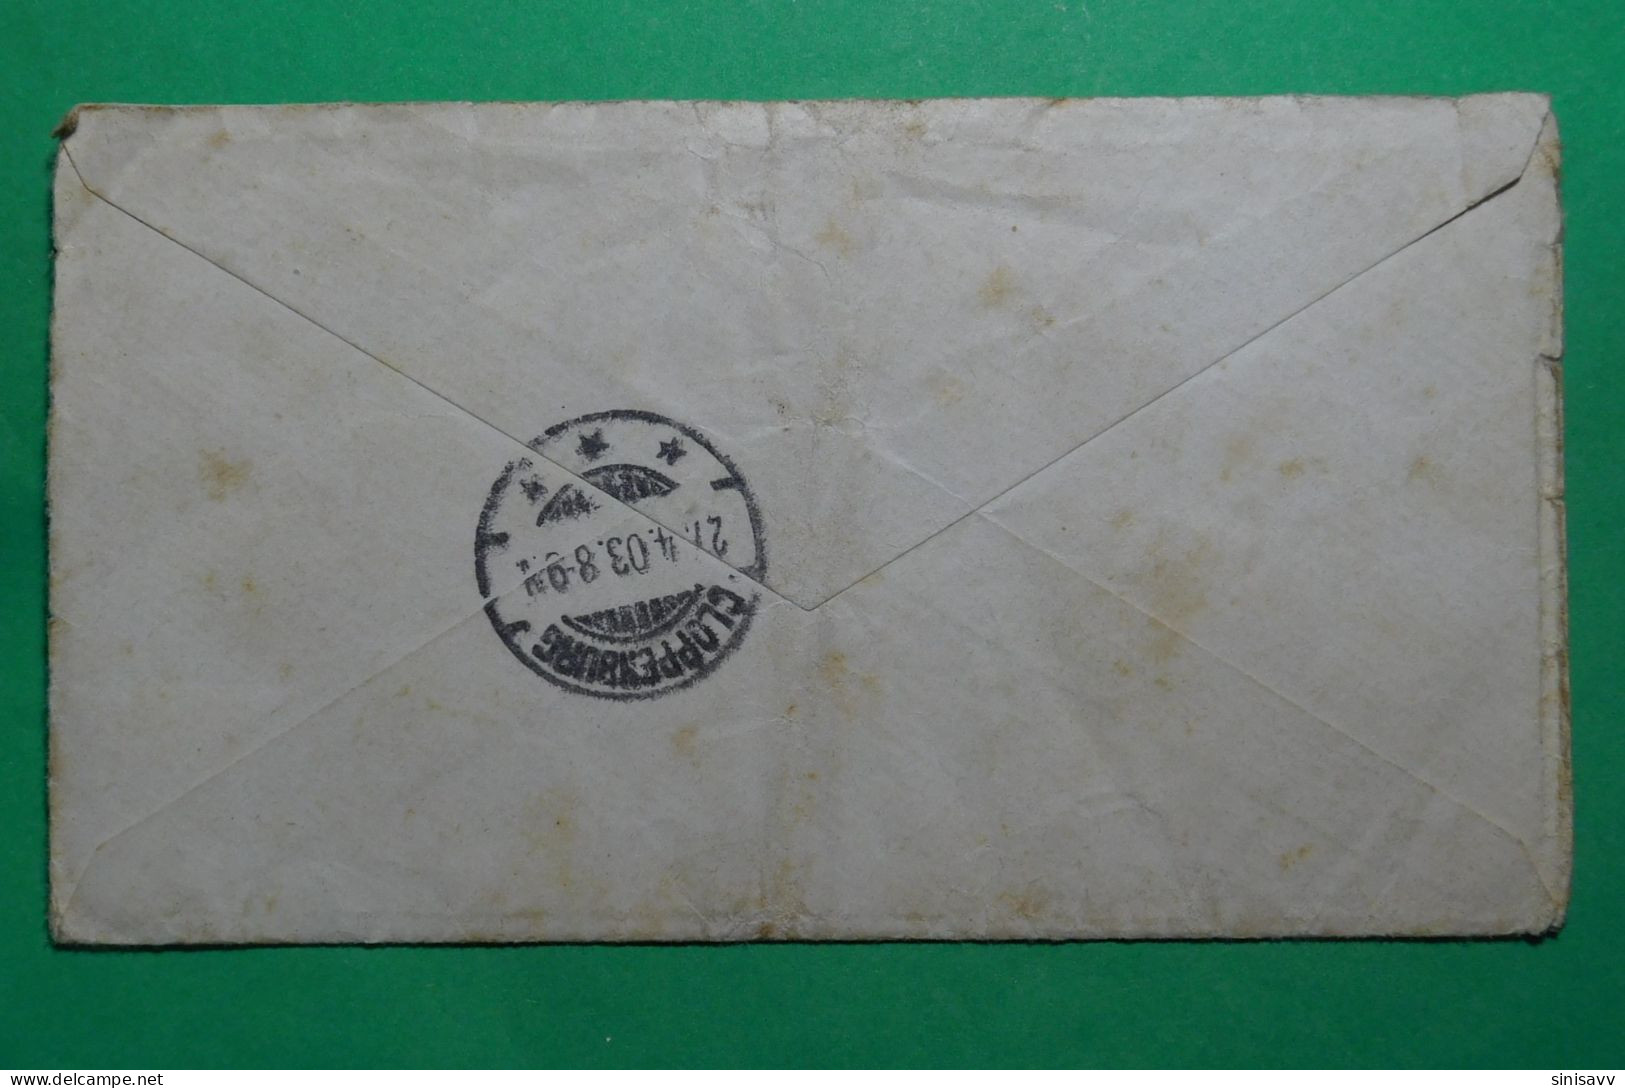 Cover - Letter - Holdorf / Cloppenburg 1903 - Briefe